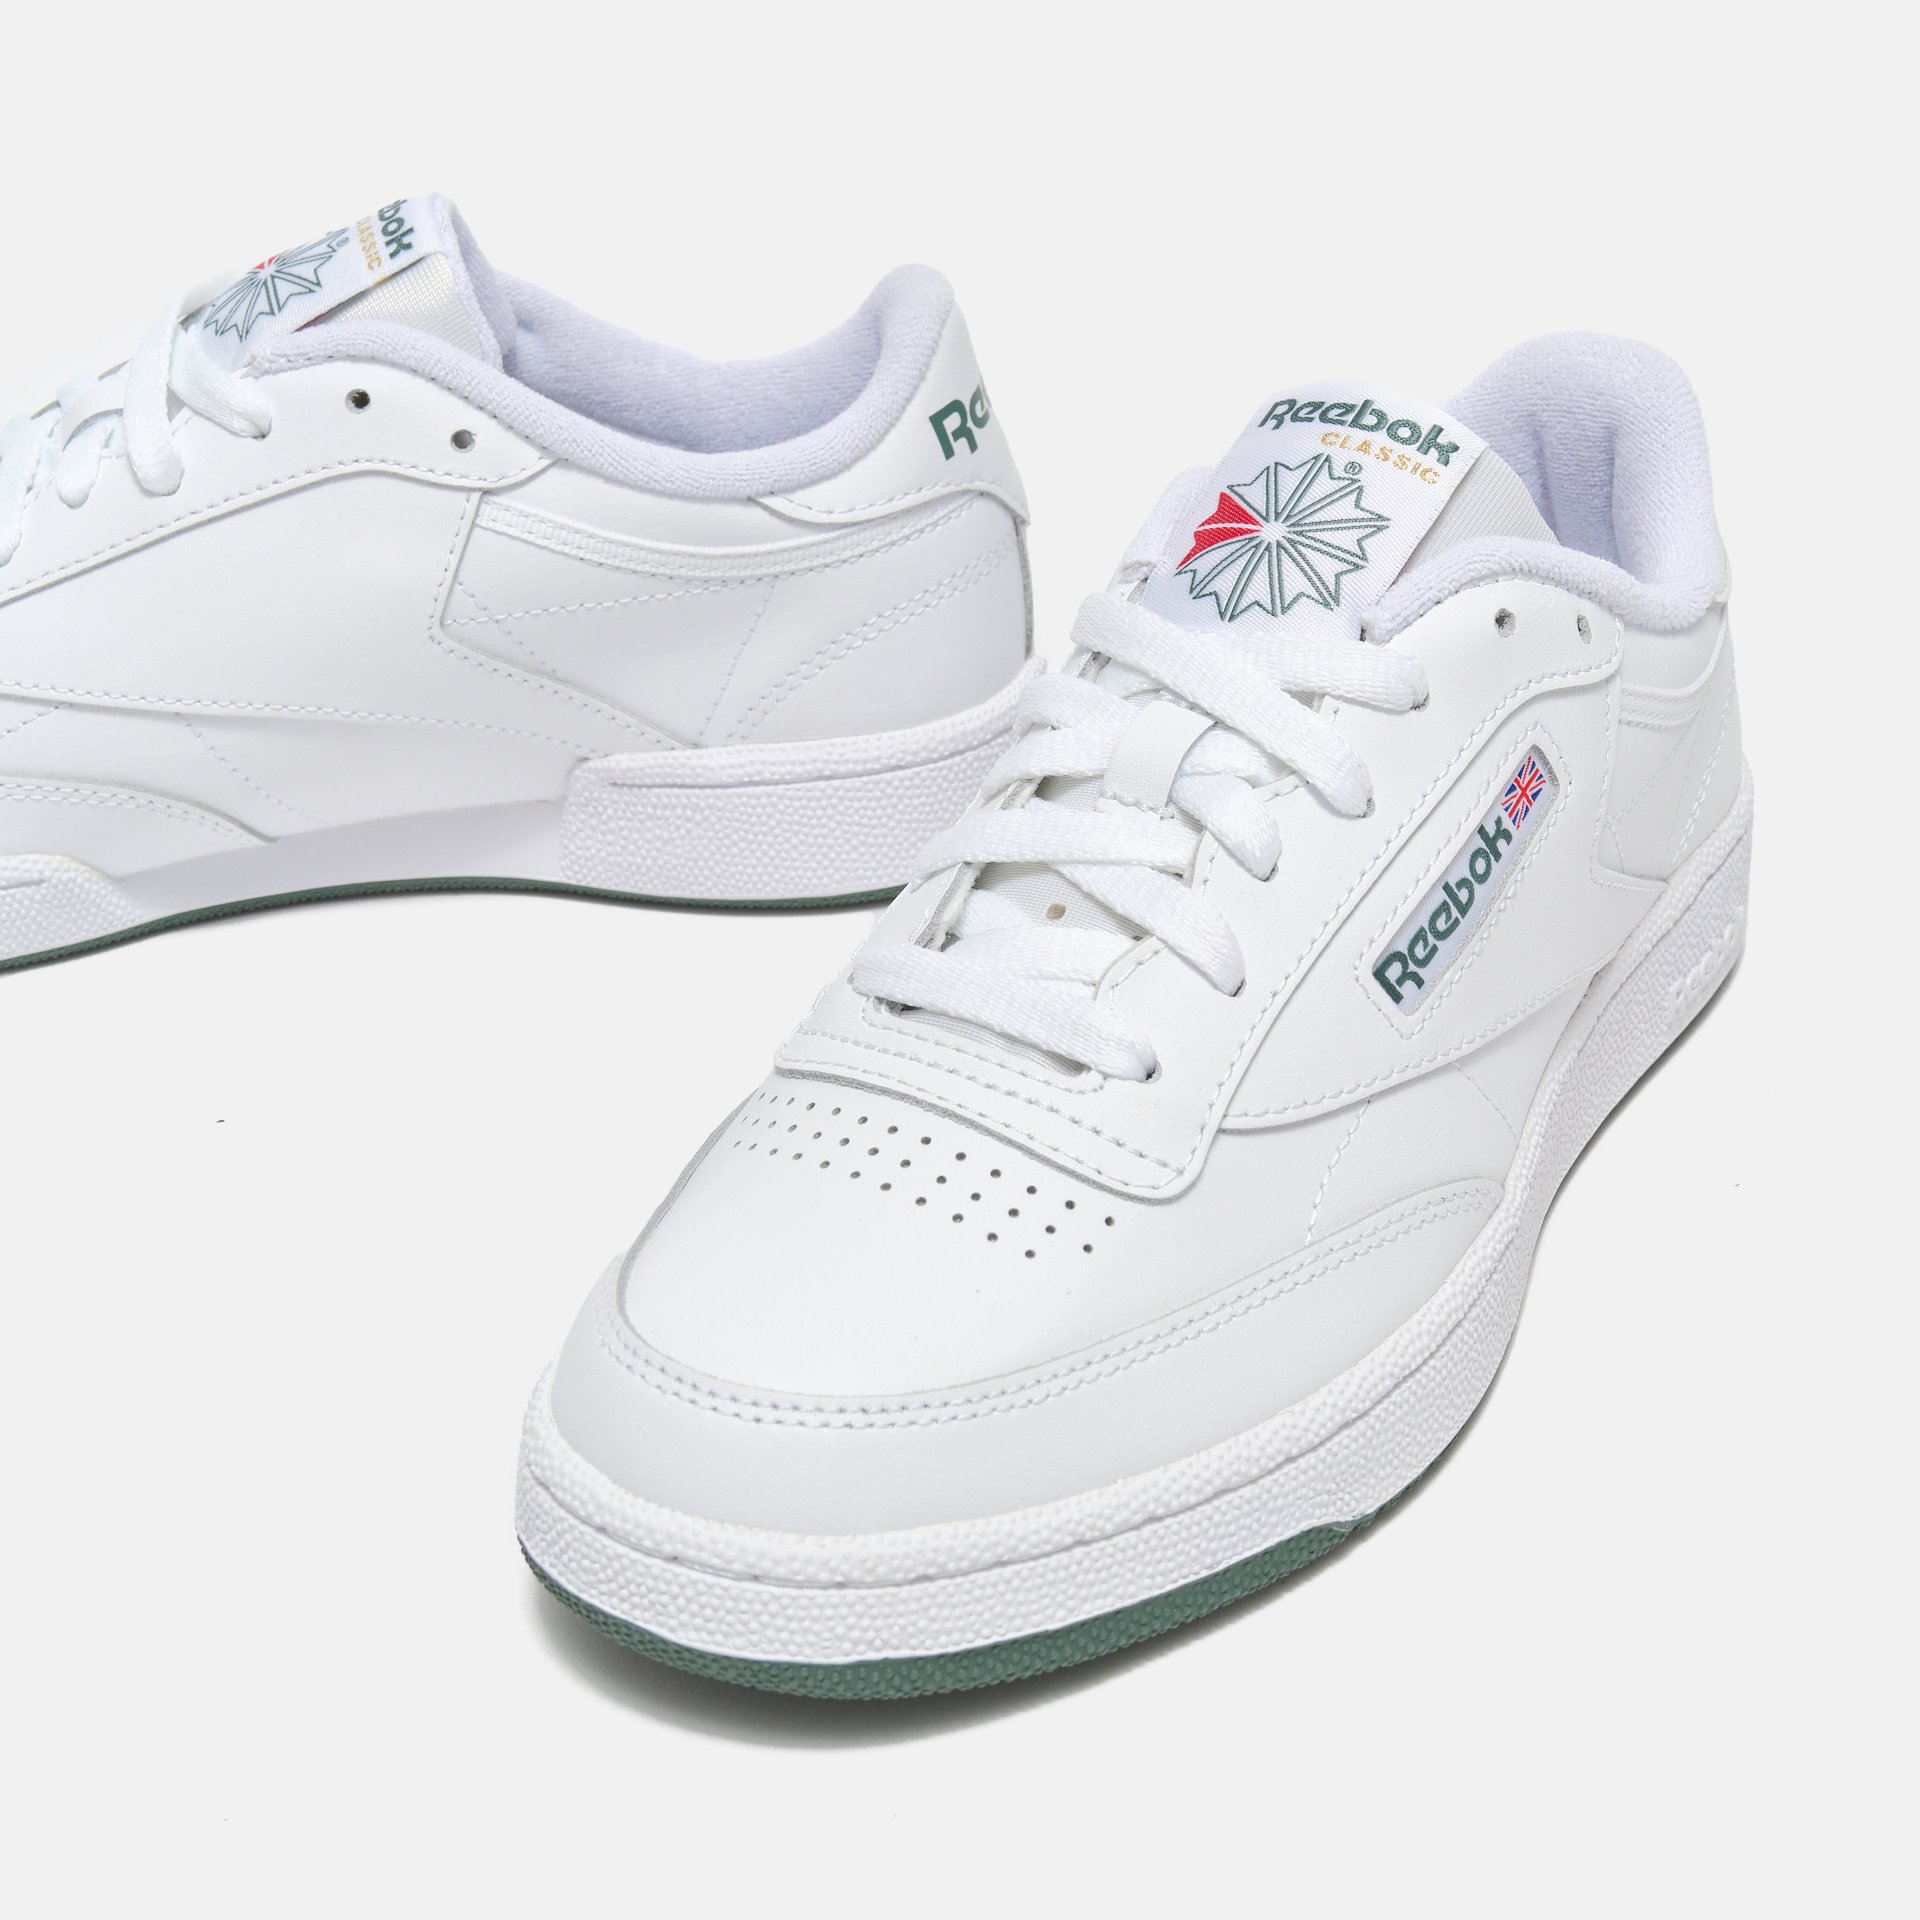 Reebok Club C 85 Sneakers White/White/Green